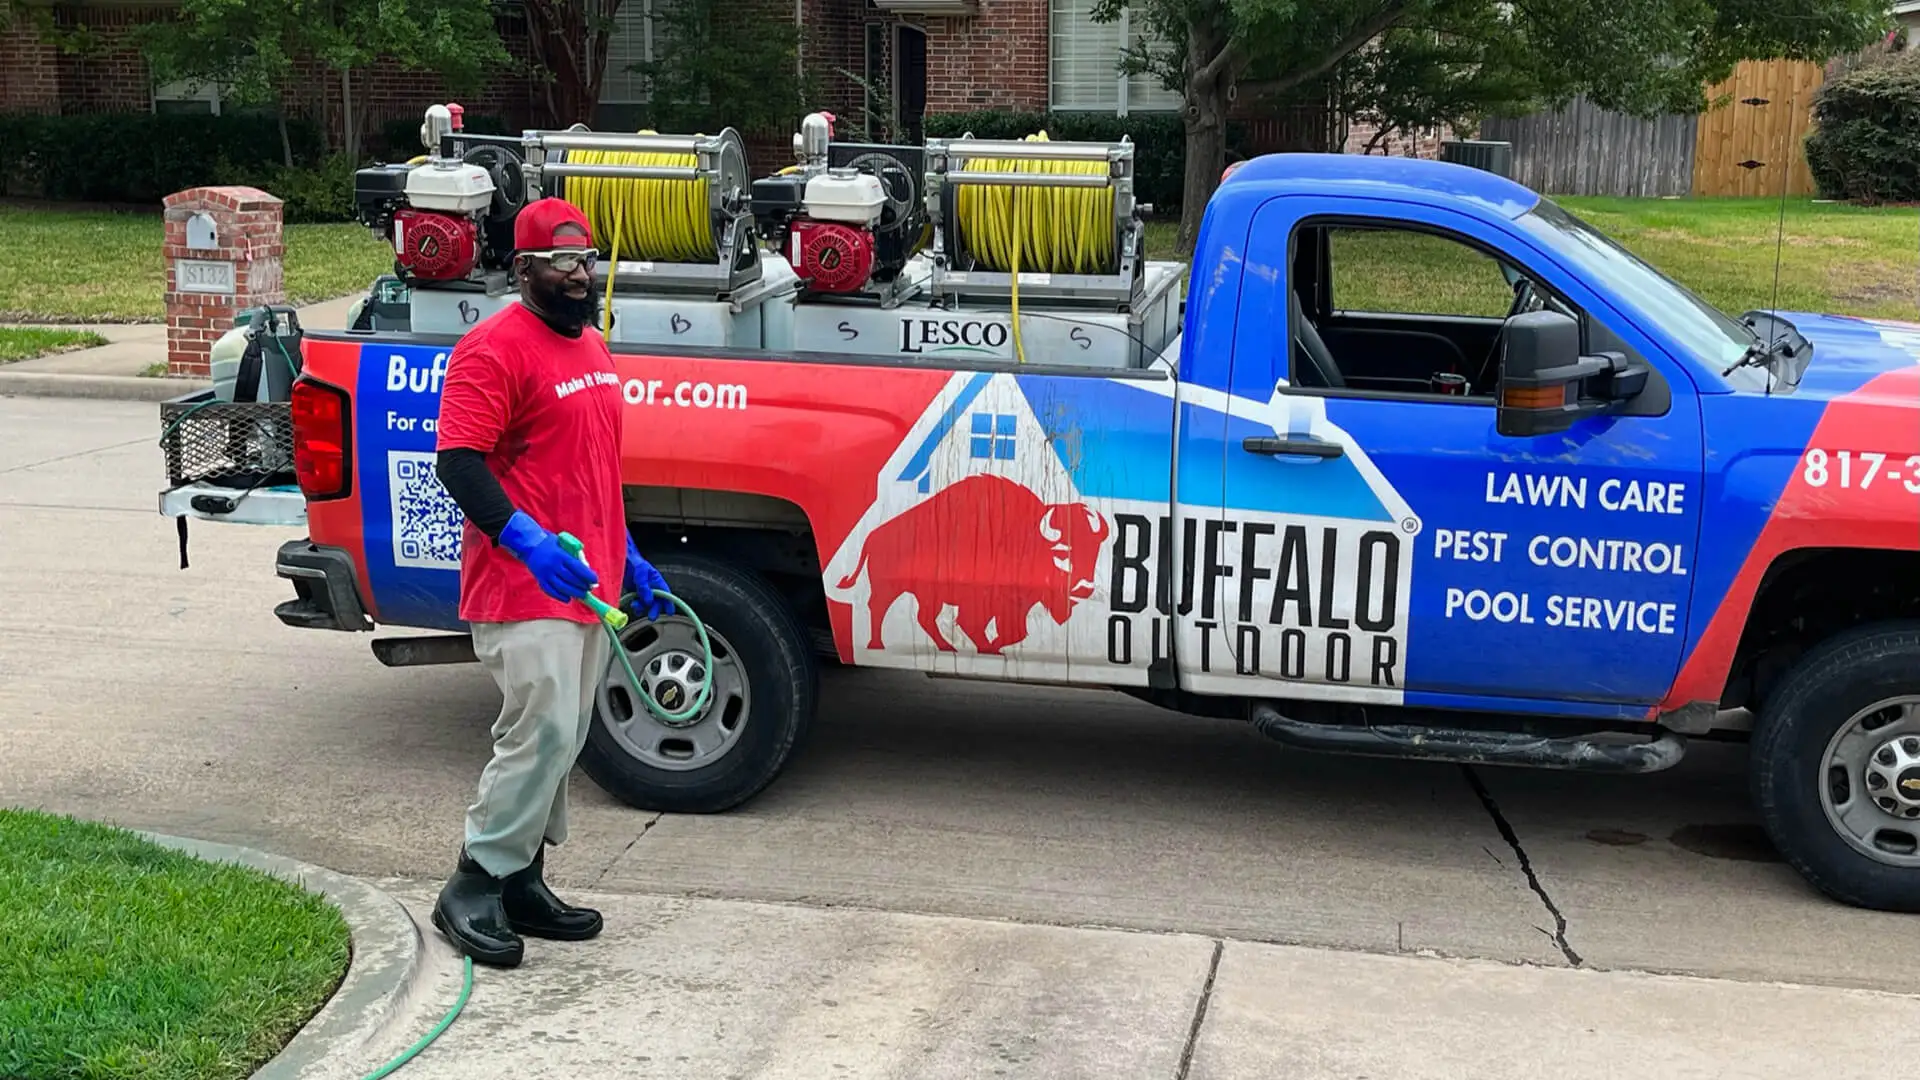 Buffalo Outdoor work truck in Saginaw, TX.